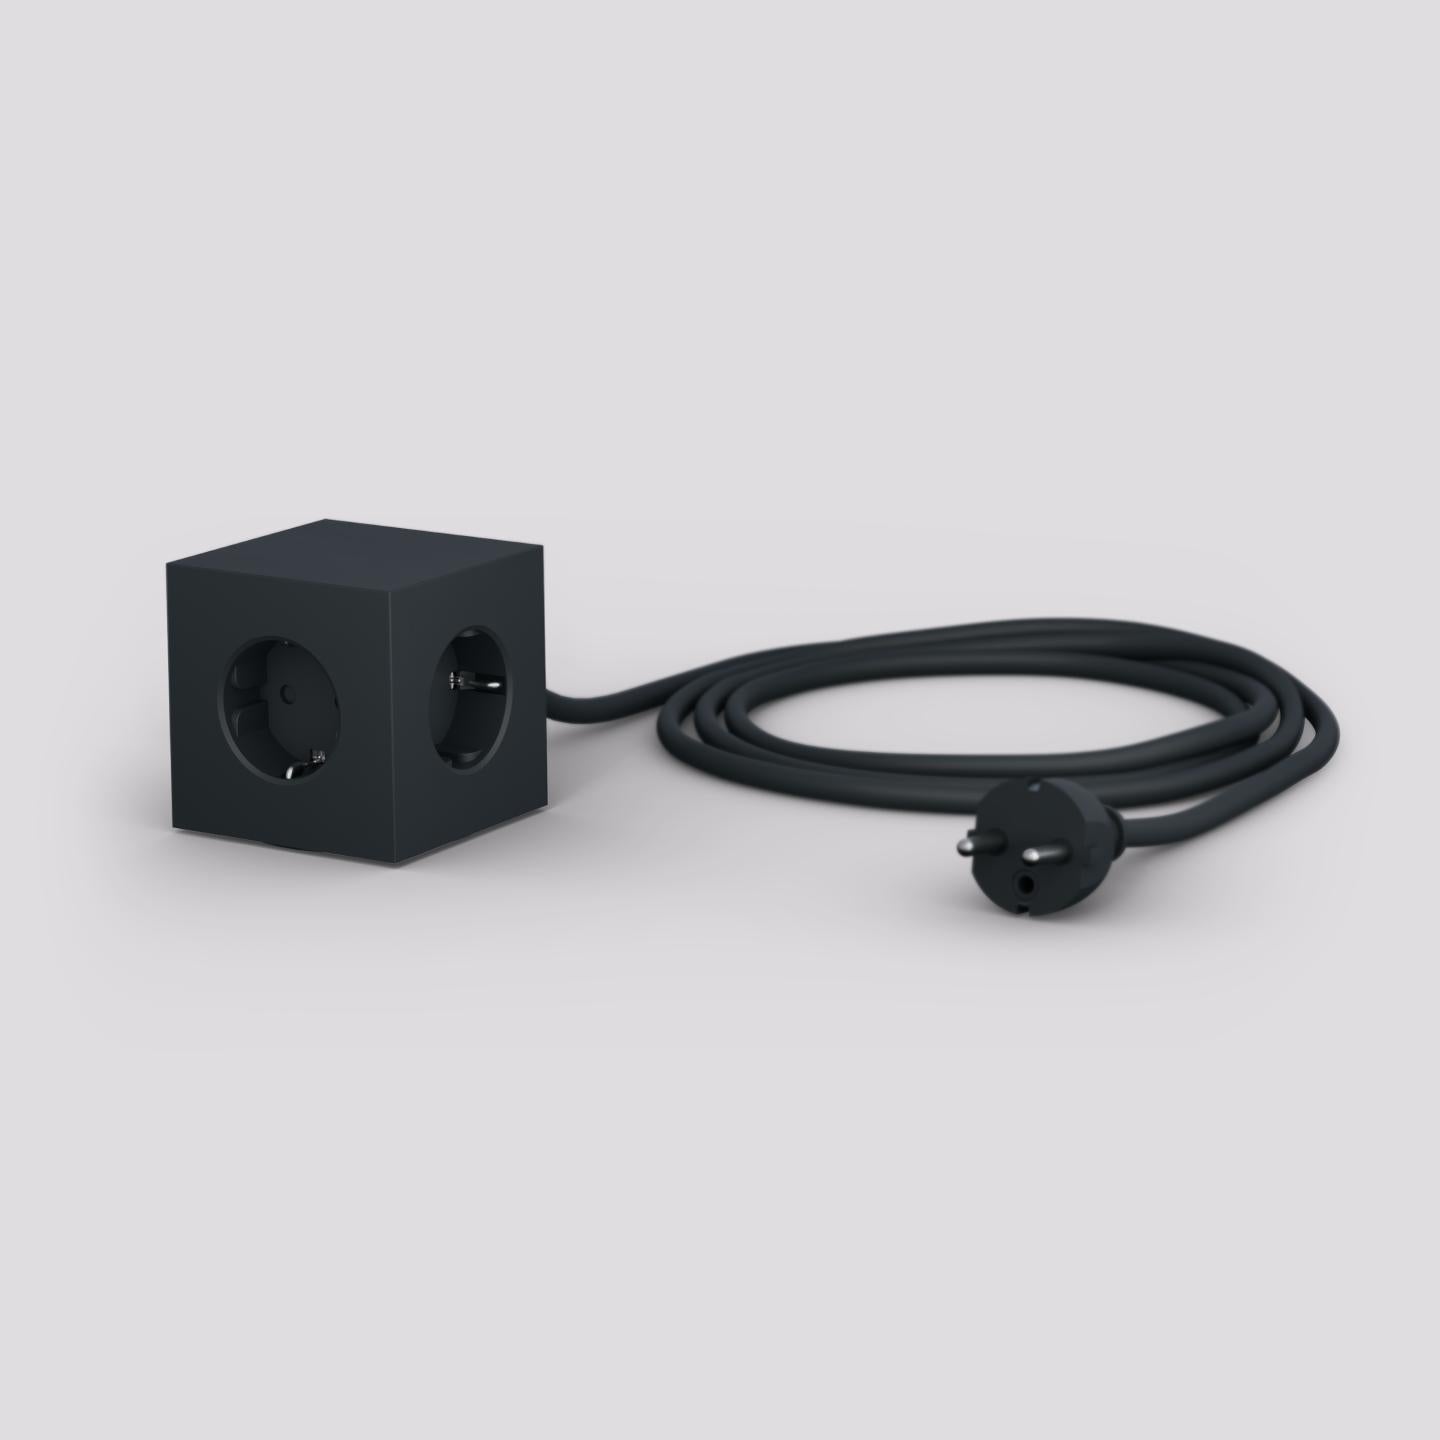 Prelungitor tip cub Square 1, 3 prize, 2 USB - Culoare Stockholm Black - Avolt